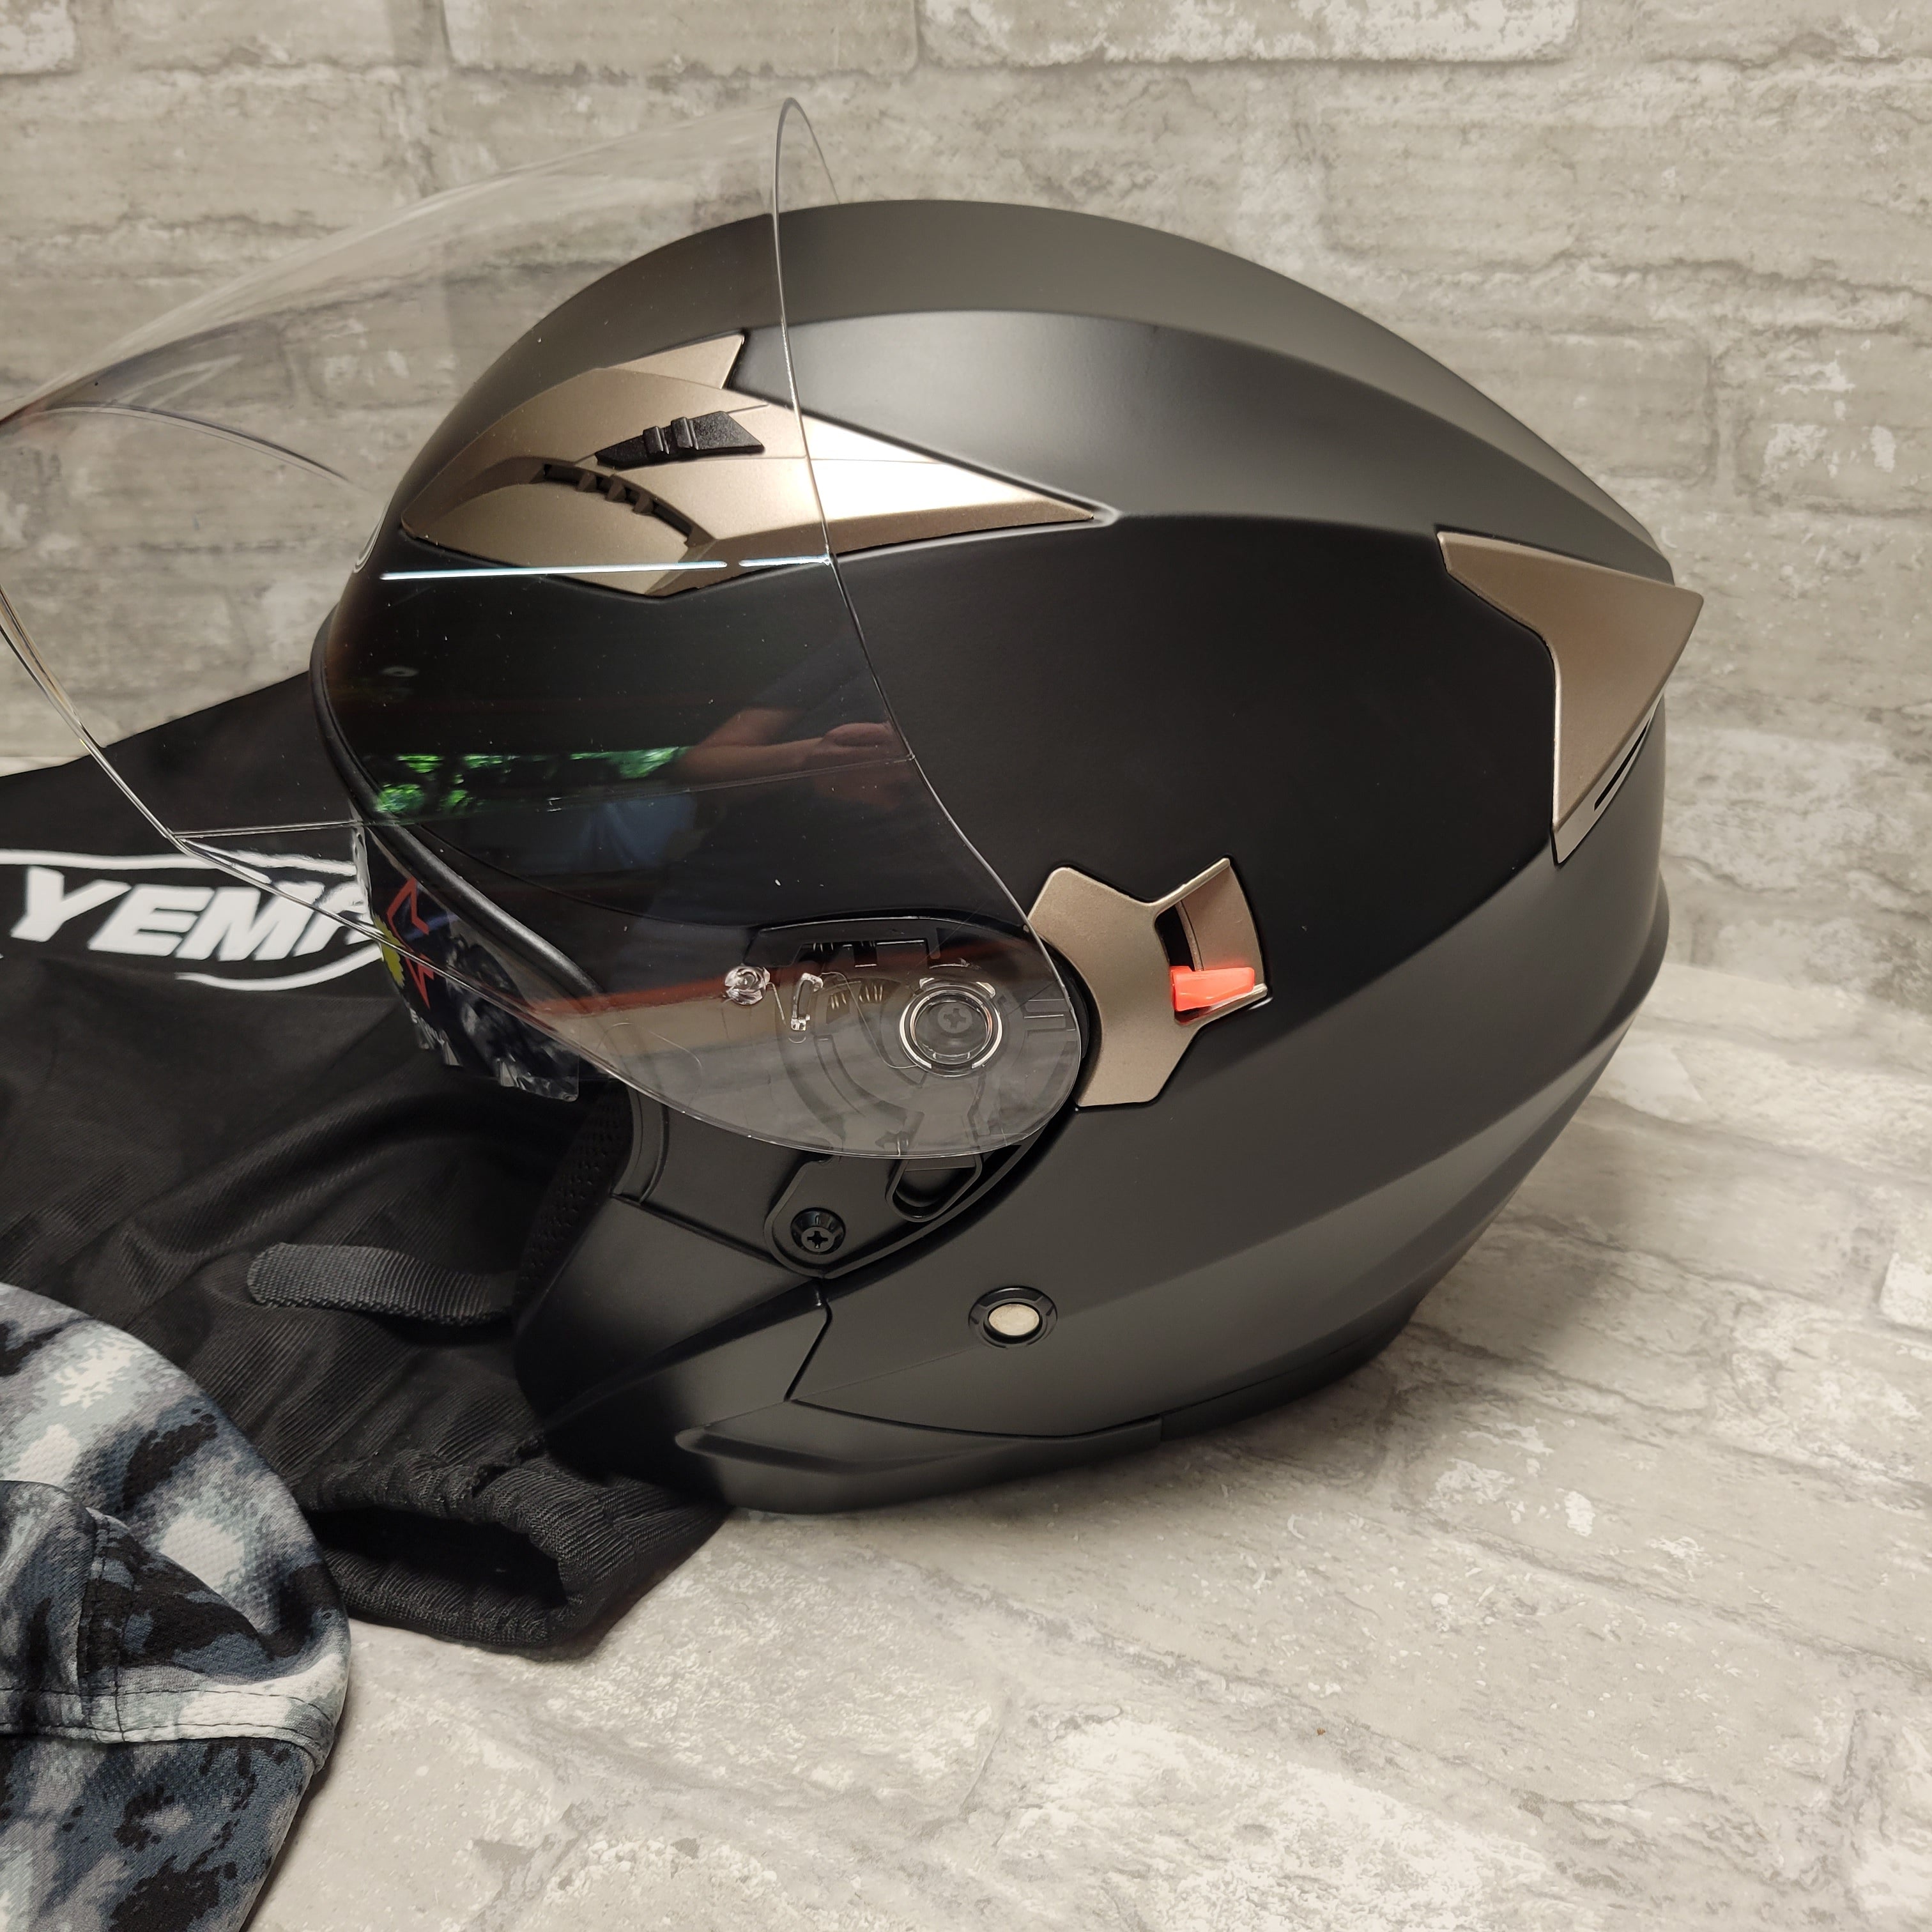 YEMA YM-627 Motorcycle Open Face Helmet DOT Approved, Matte Black XL (8069374410990)